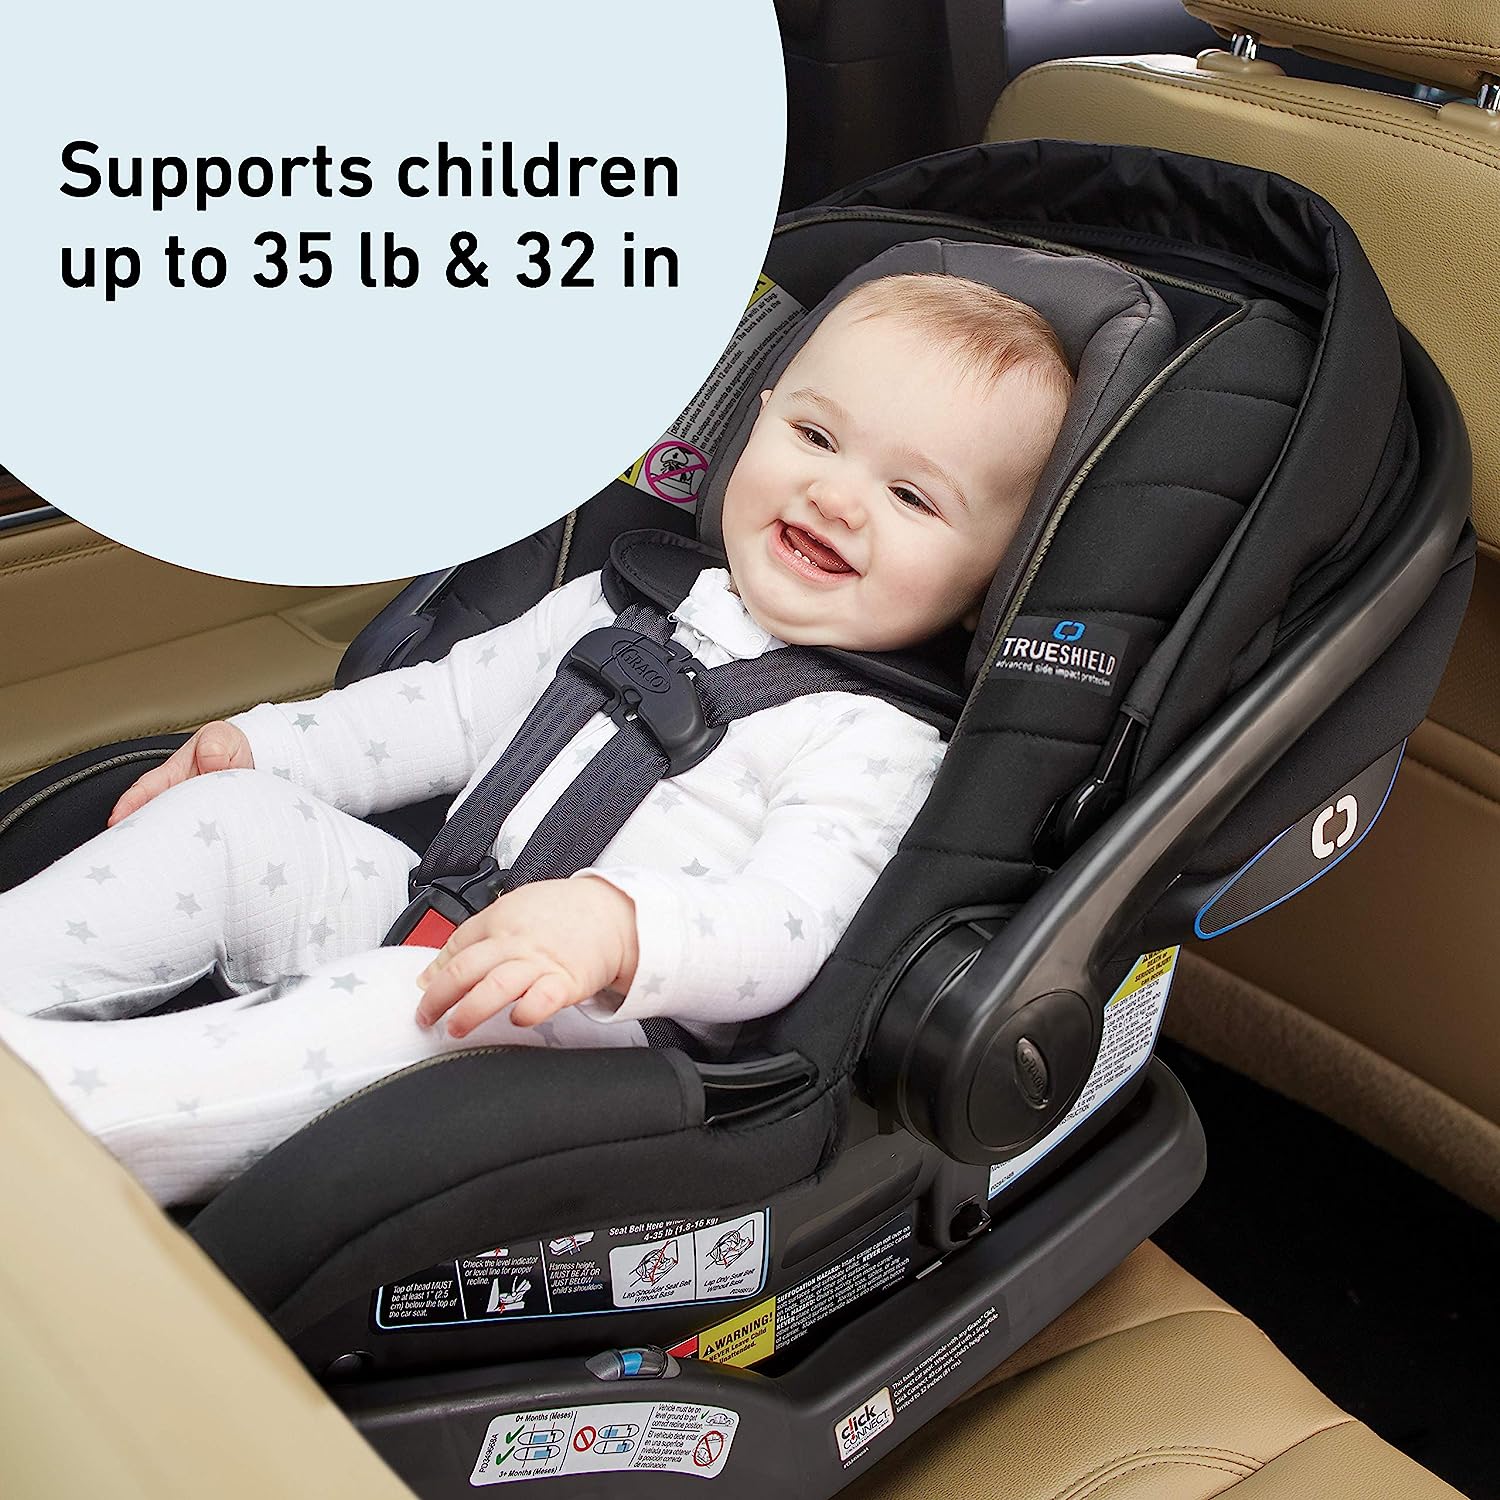 Graco SnugRide SnugLock 35 LX Infant Car Seat - $140